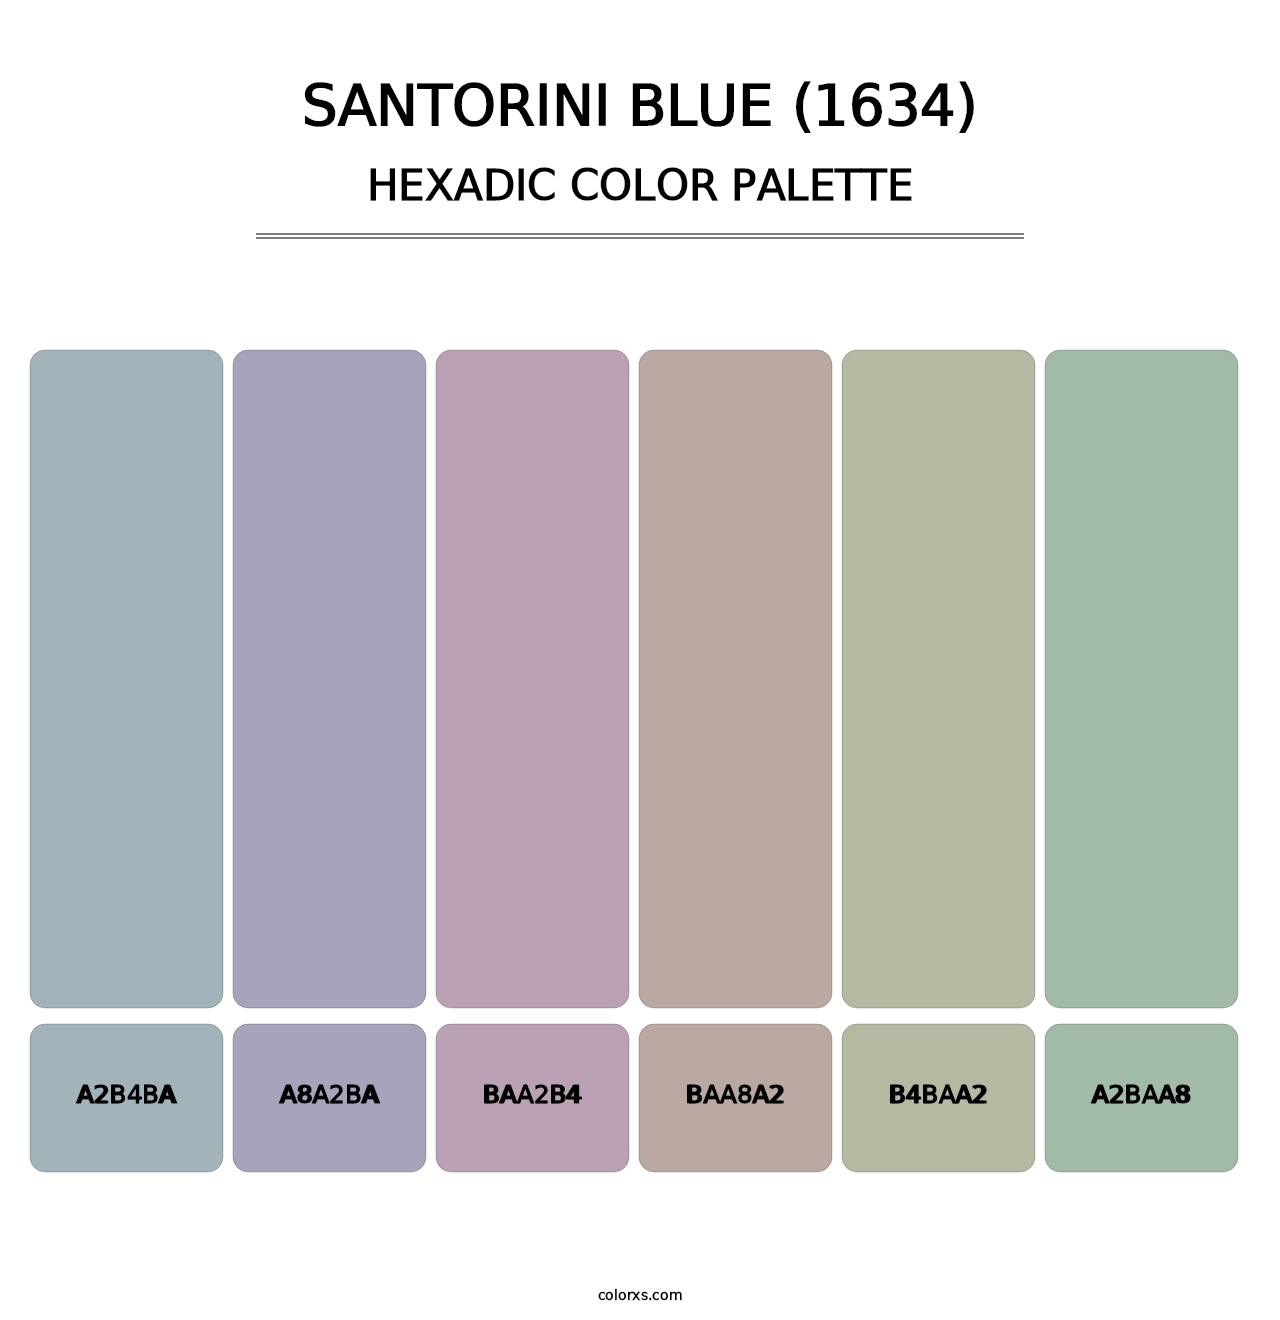 Santorini Blue (1634) - Hexadic Color Palette